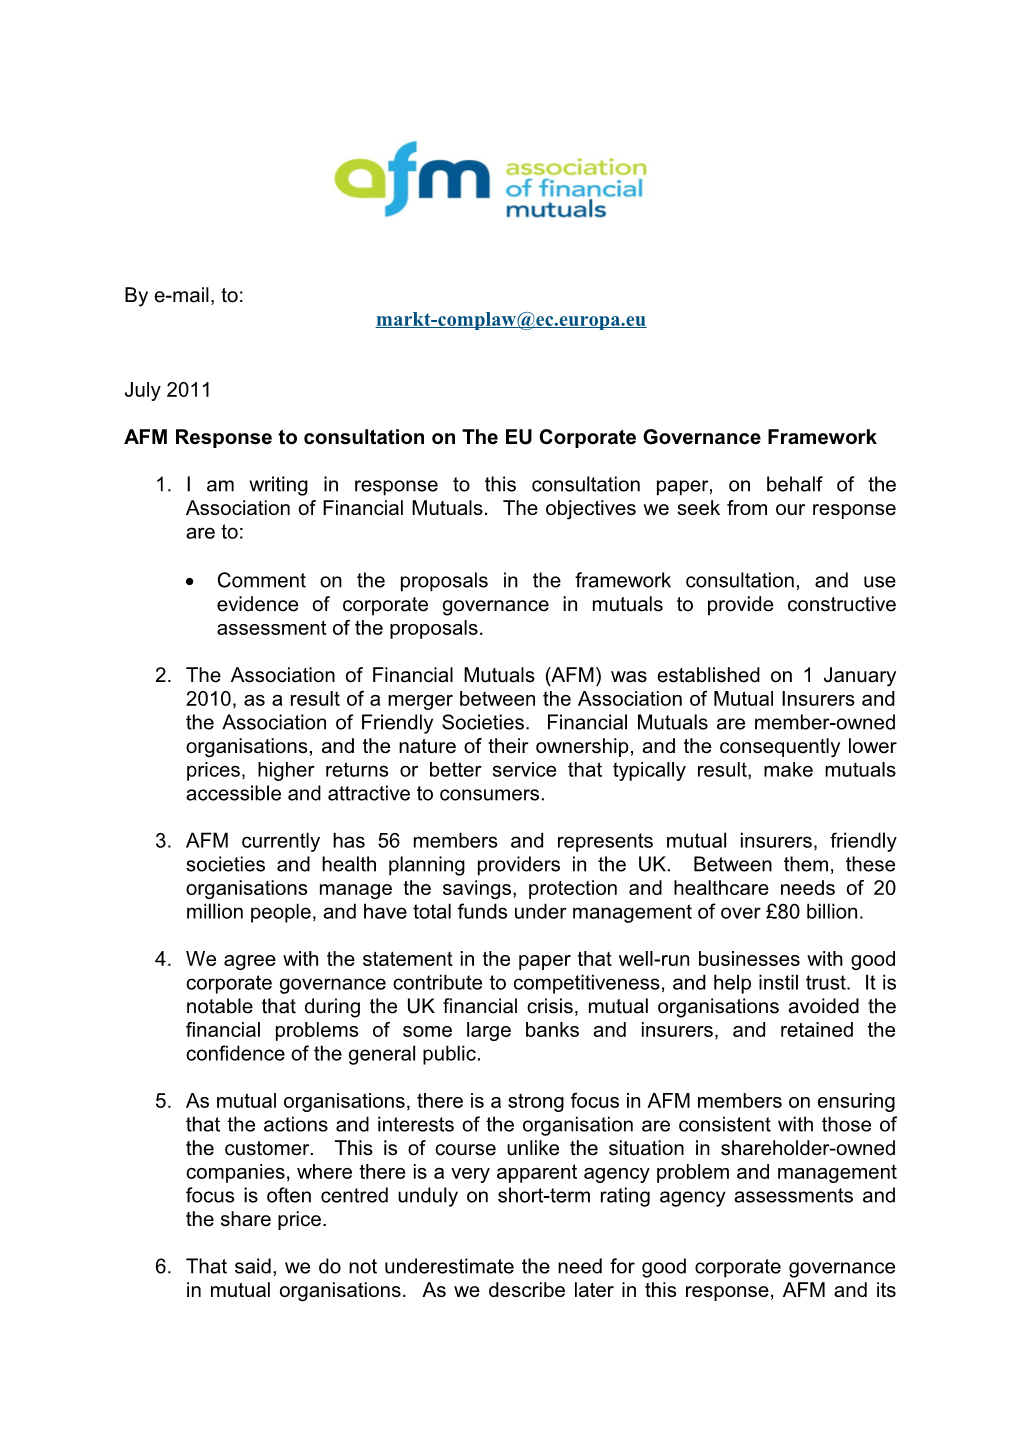 AFM Response to Consultation on the EU Corporate Governance Framework